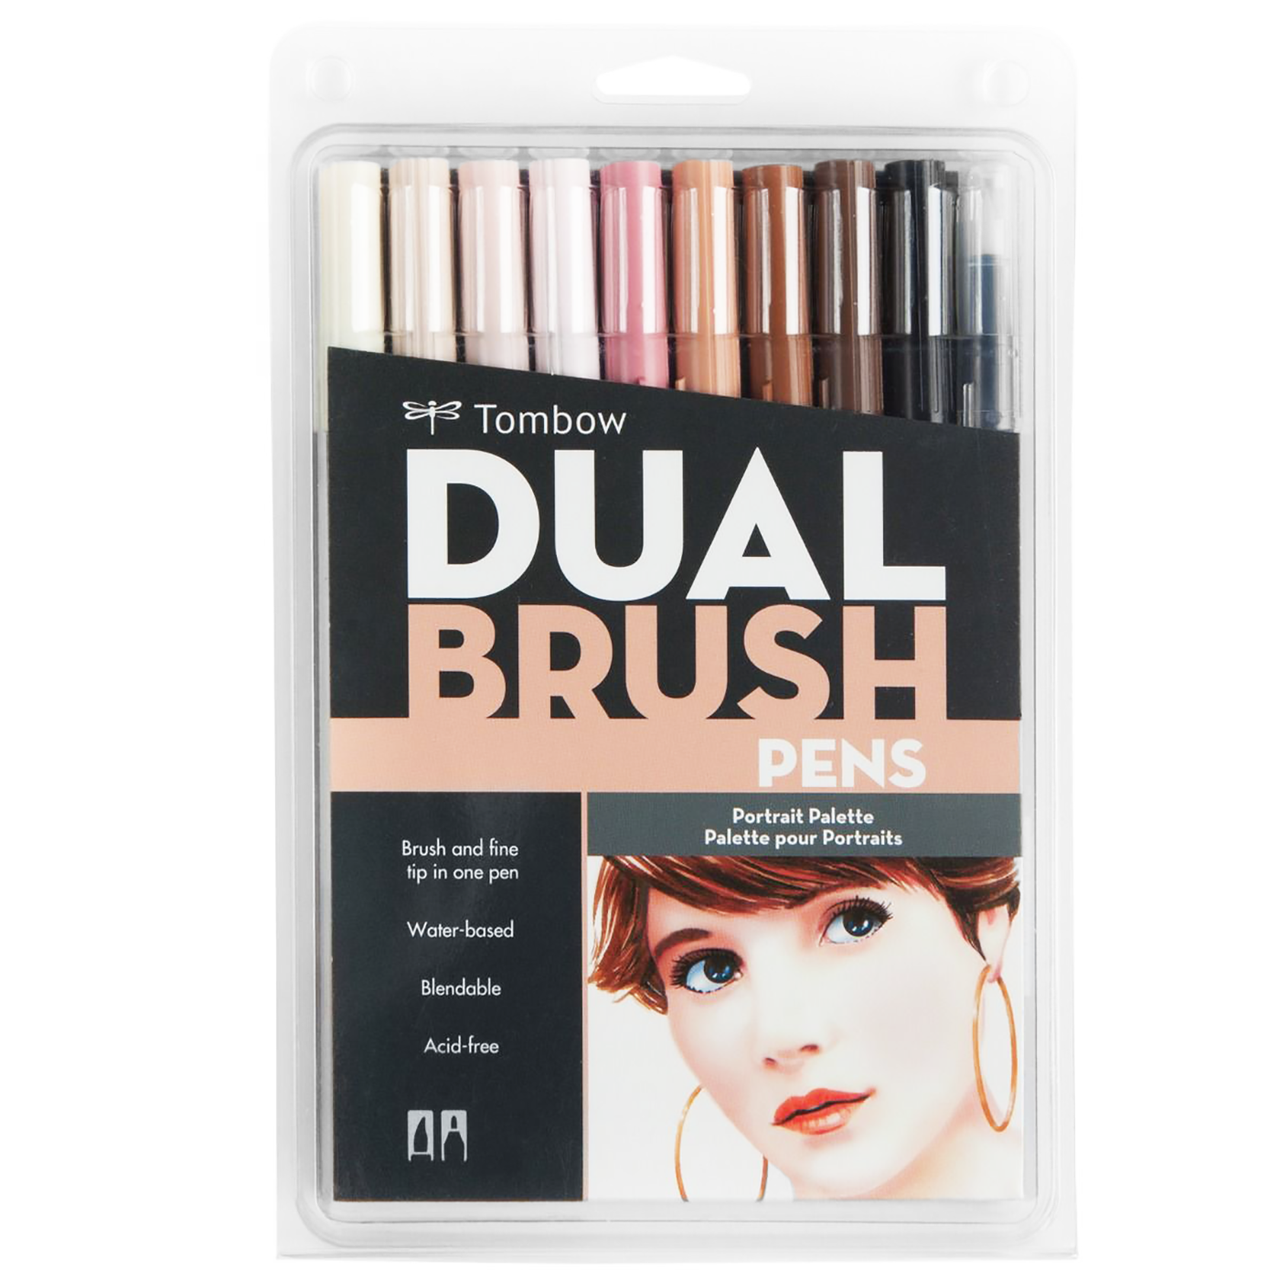 Tombow Dual Brush Pen Set, Desert Flora, 10PK - John Neal Books